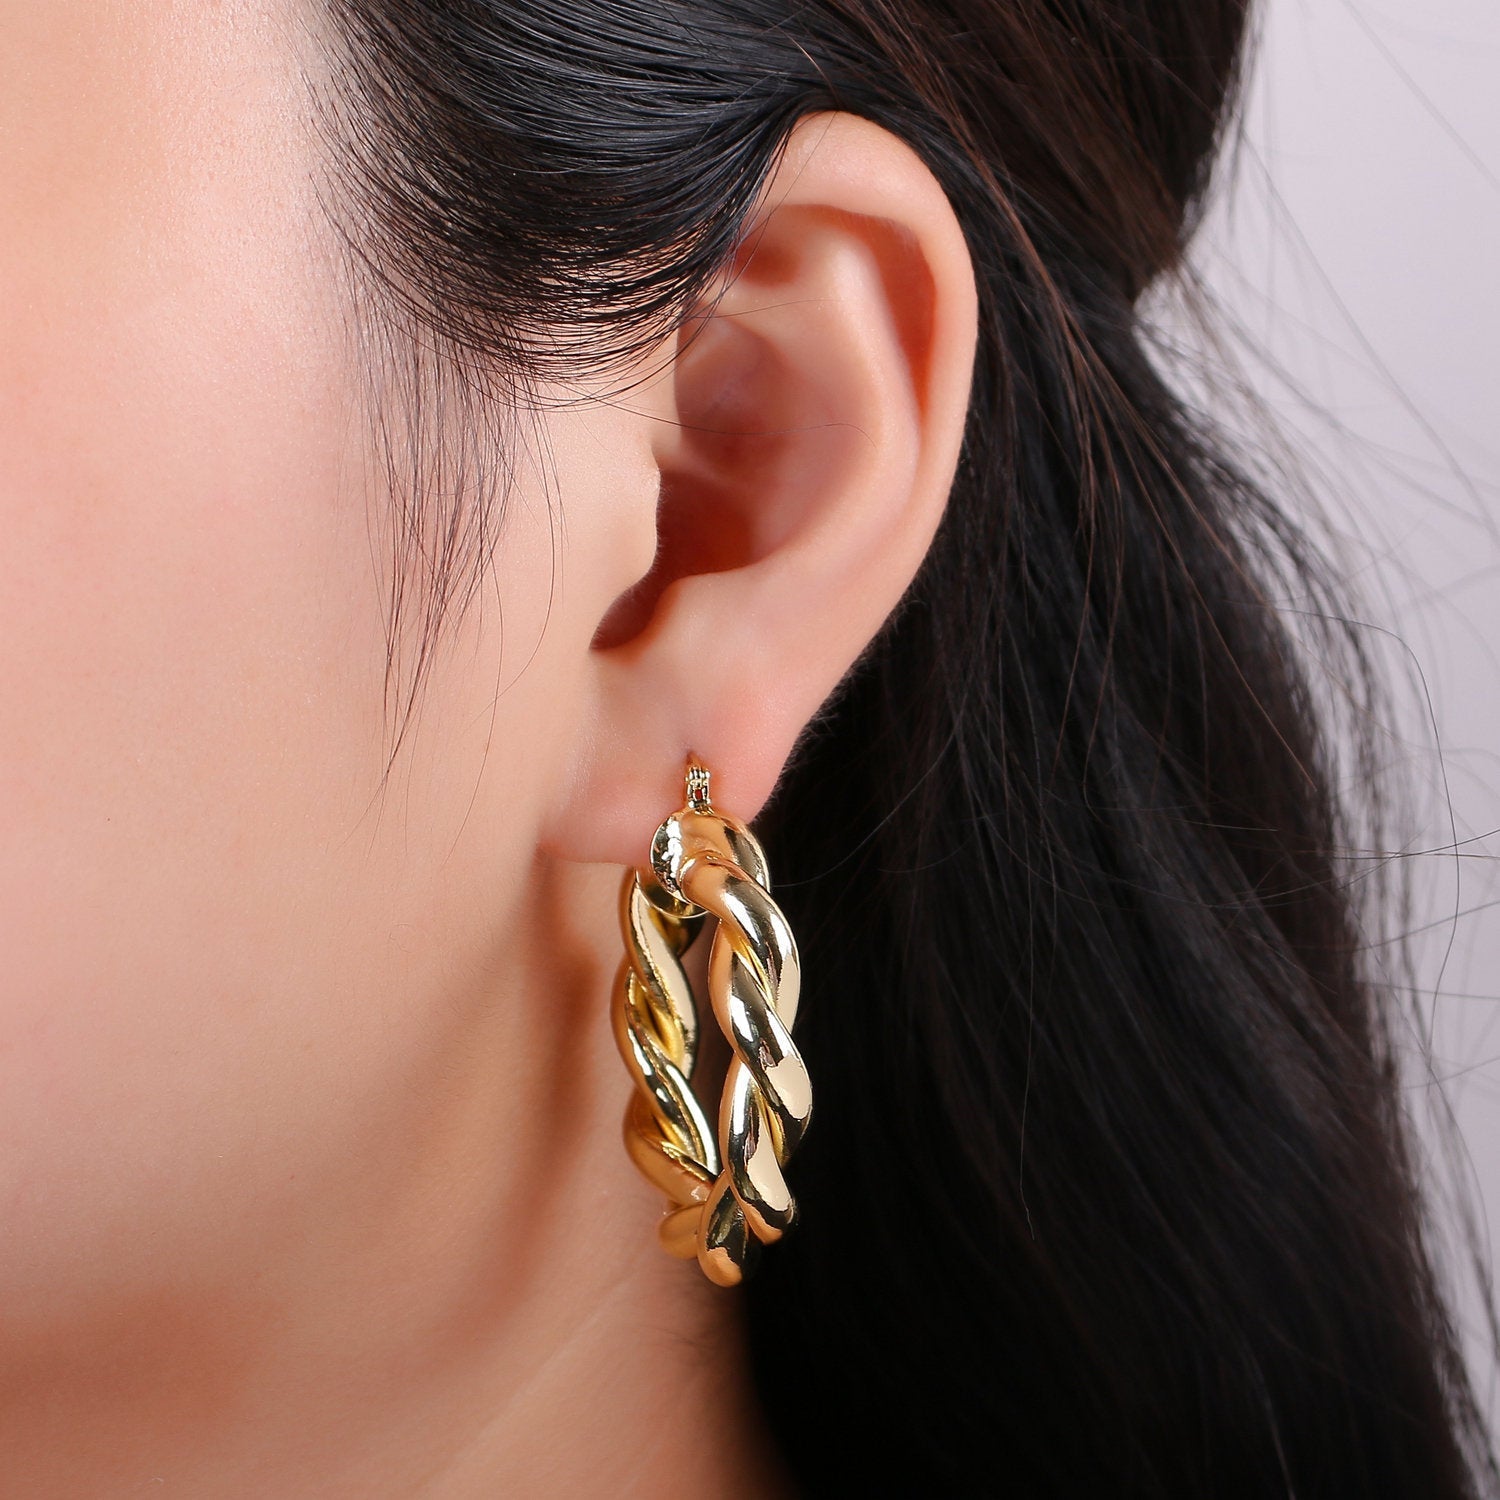 Gold Twisted Hoop Earrings, Bold Gold Hoop Earrings, Chunky Earrings, Statement Hoops, 14k Gold Filled Hoops Earring gift for her - DLUXCA